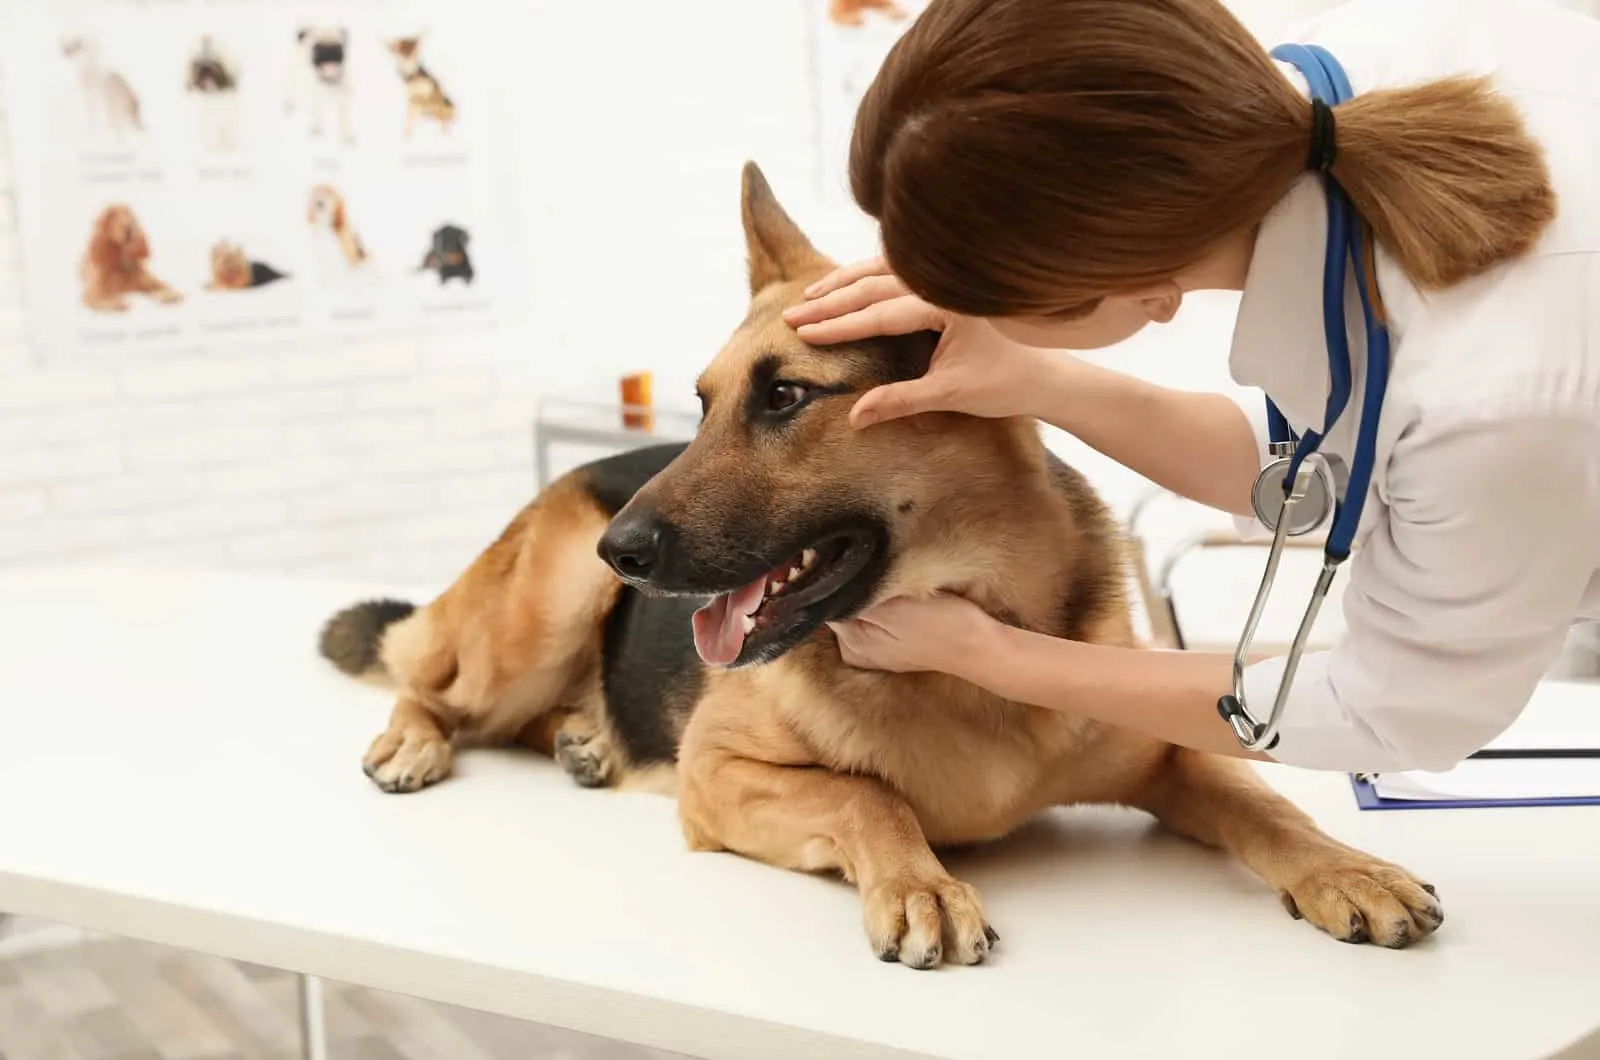 veterinarian examining dog's eyes in clinic